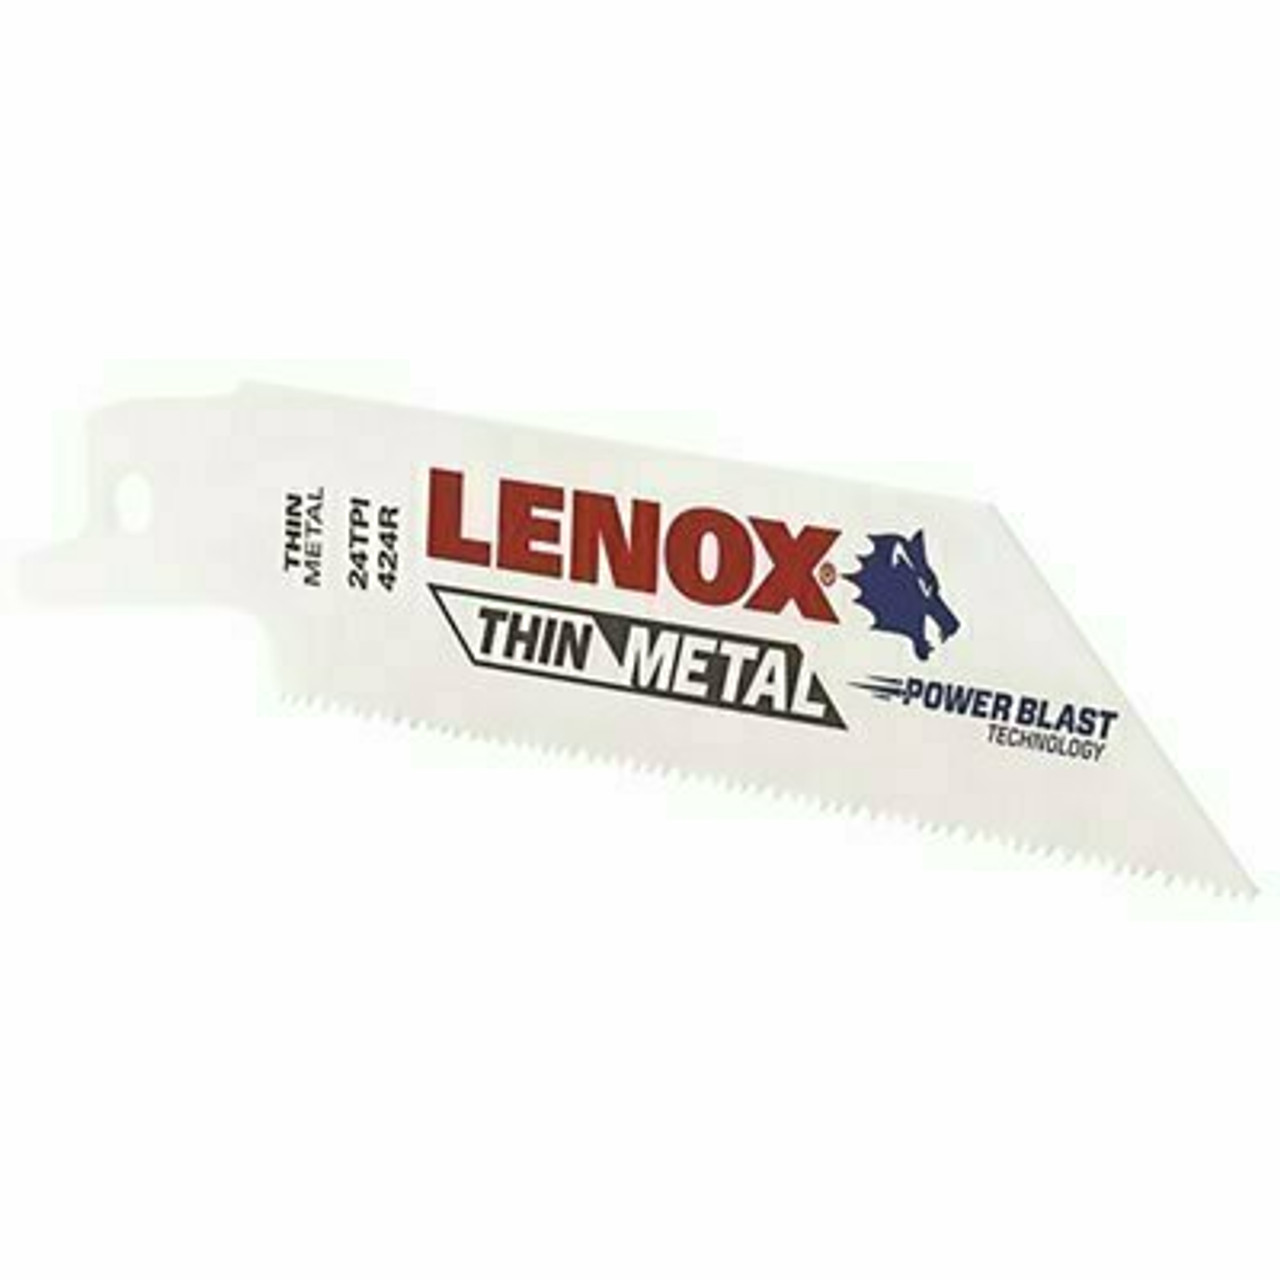 Lenox Lenox Metal Cutting Bi-Metal Reciprocating Saw Blade, 24 Tpi, 4 In.